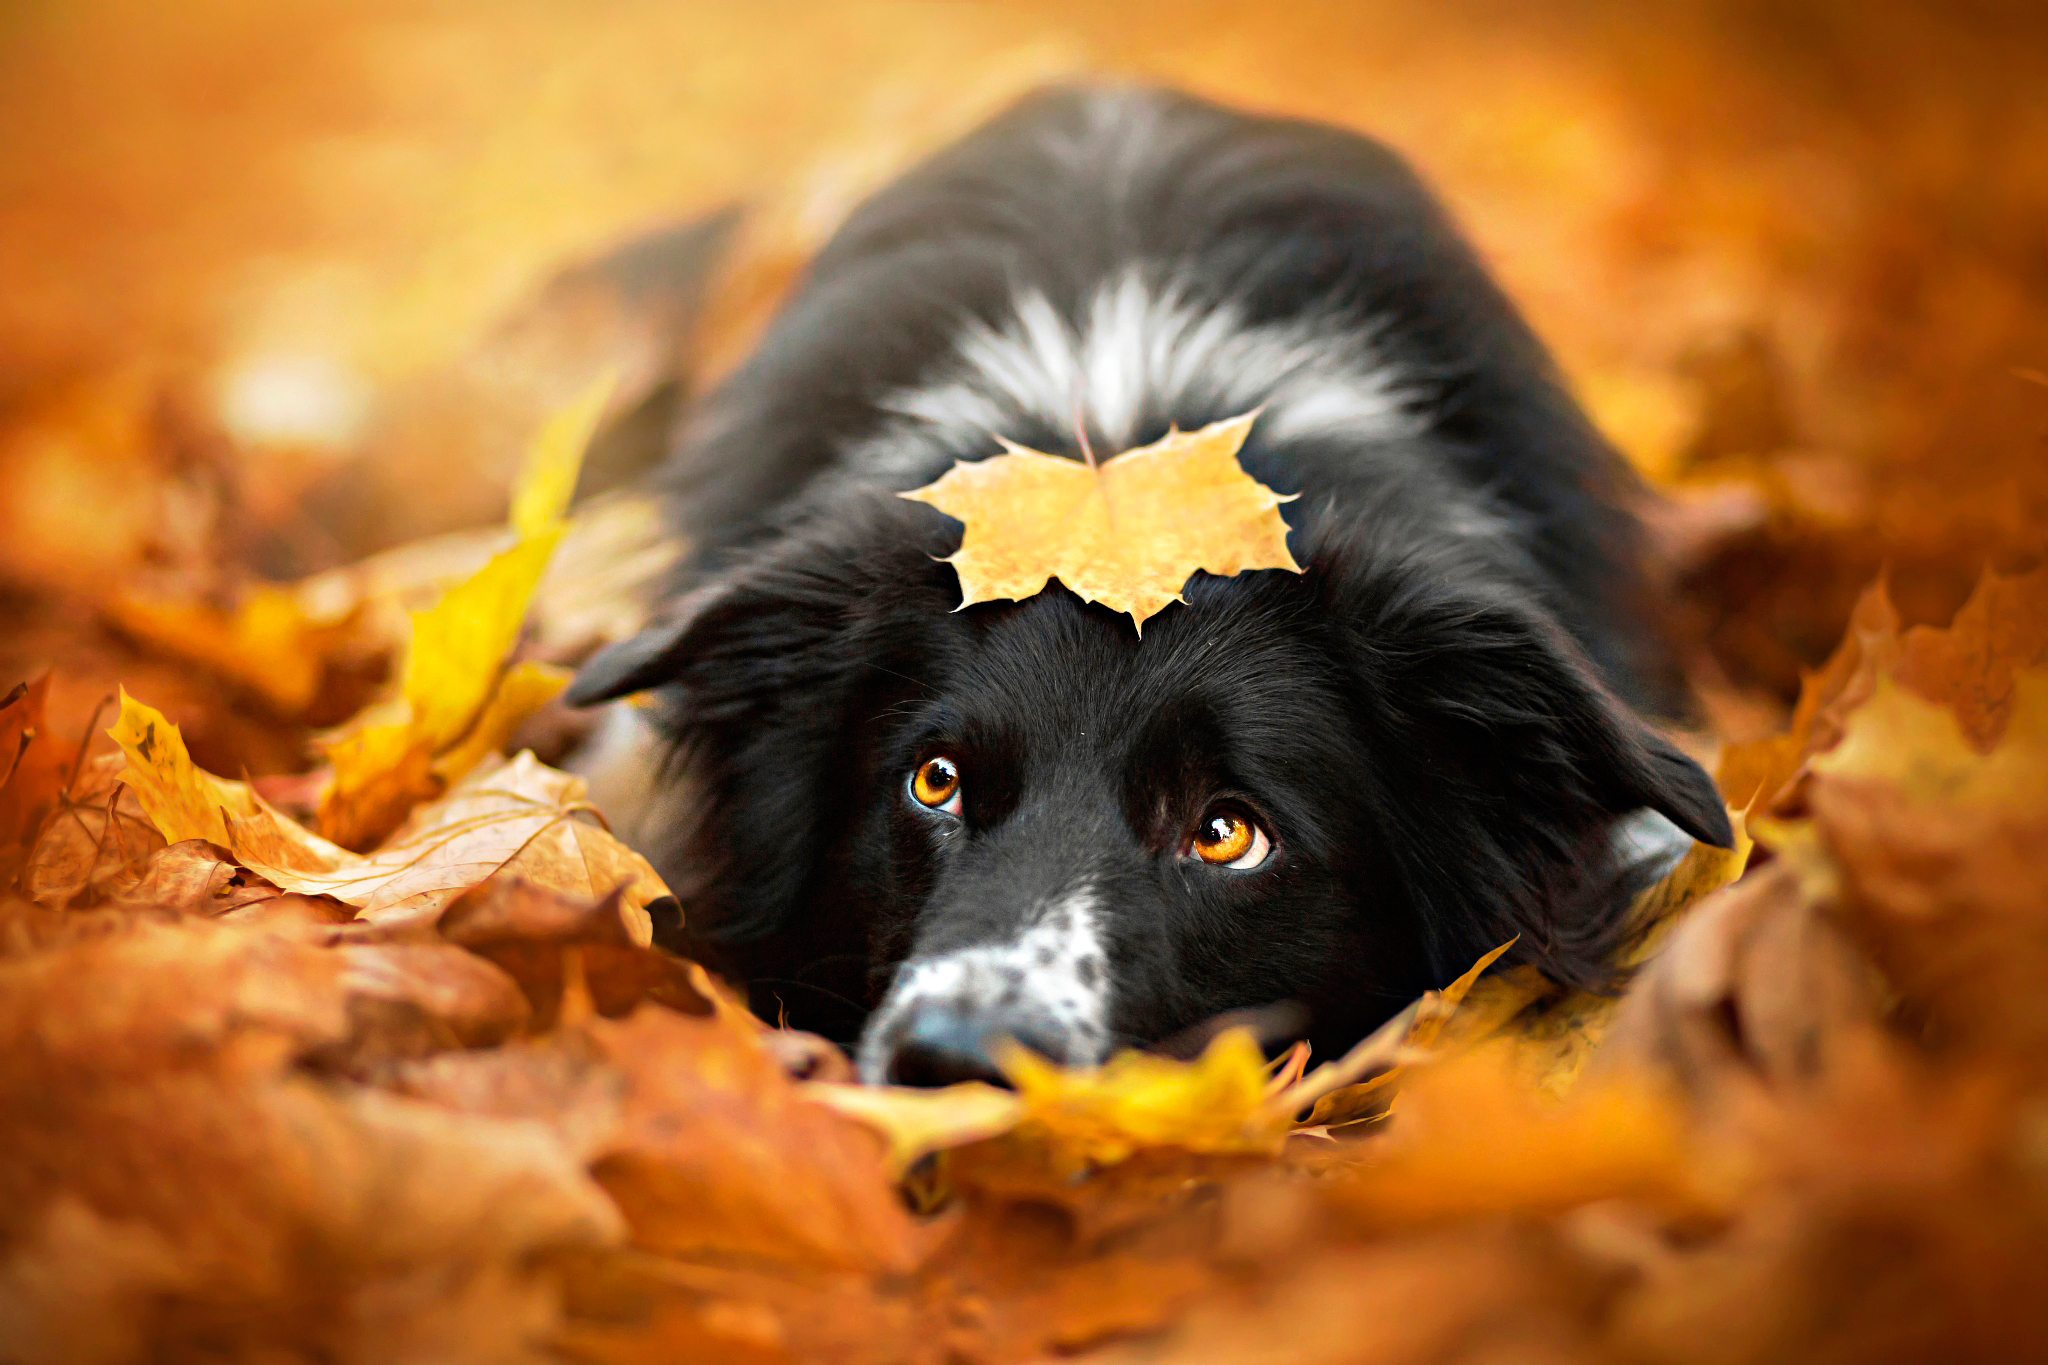 Puppy, sweet, cute, dogs, autumn, dog, autumn splendor, leaves